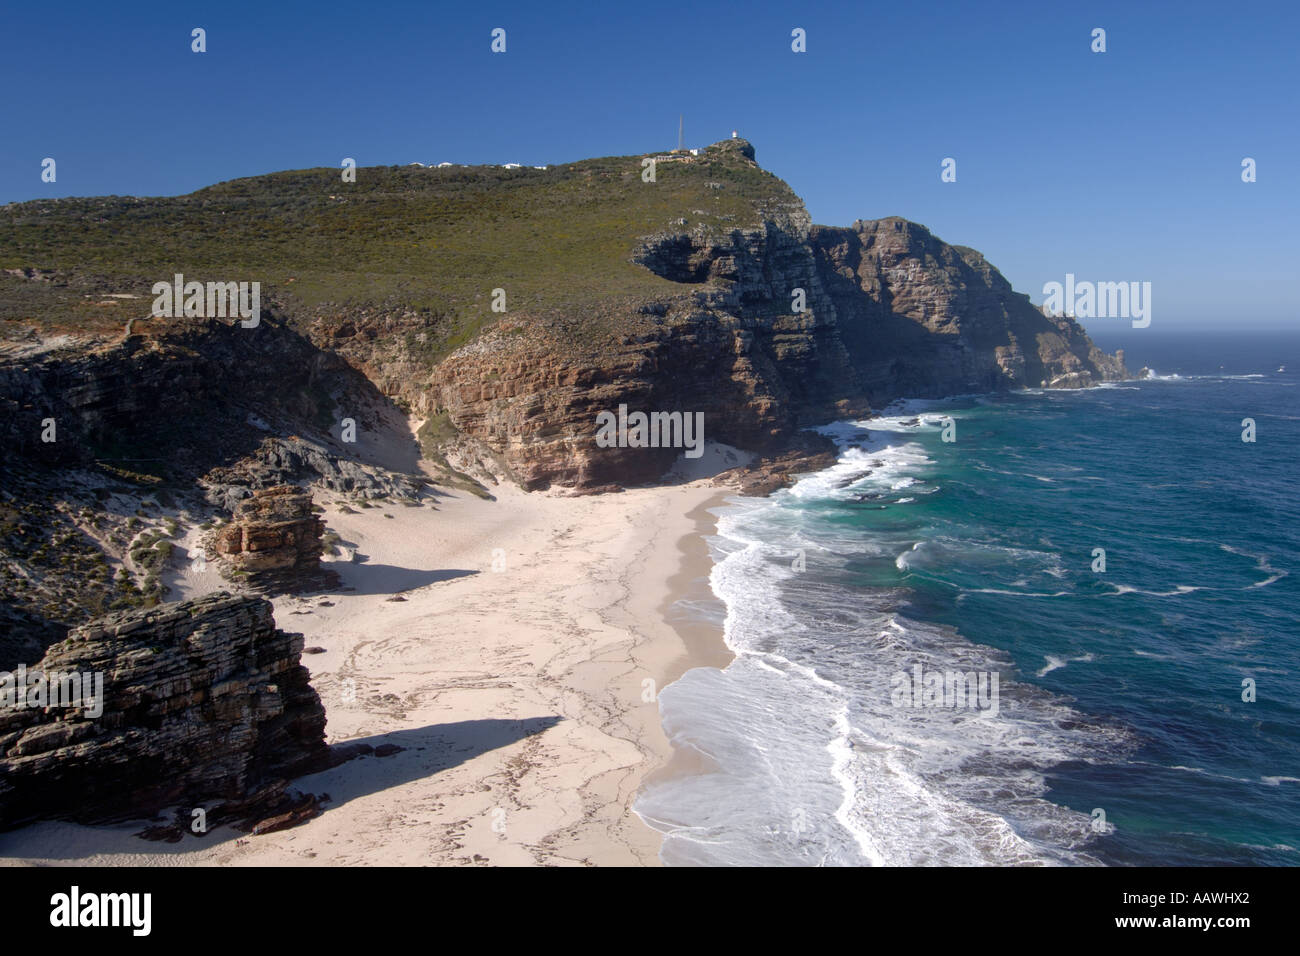 Vista di Cape Point Cape Maclear e Diaz spiaggia nella Riserva Naturale di Cape Point in Sud Africa. Foto Stock